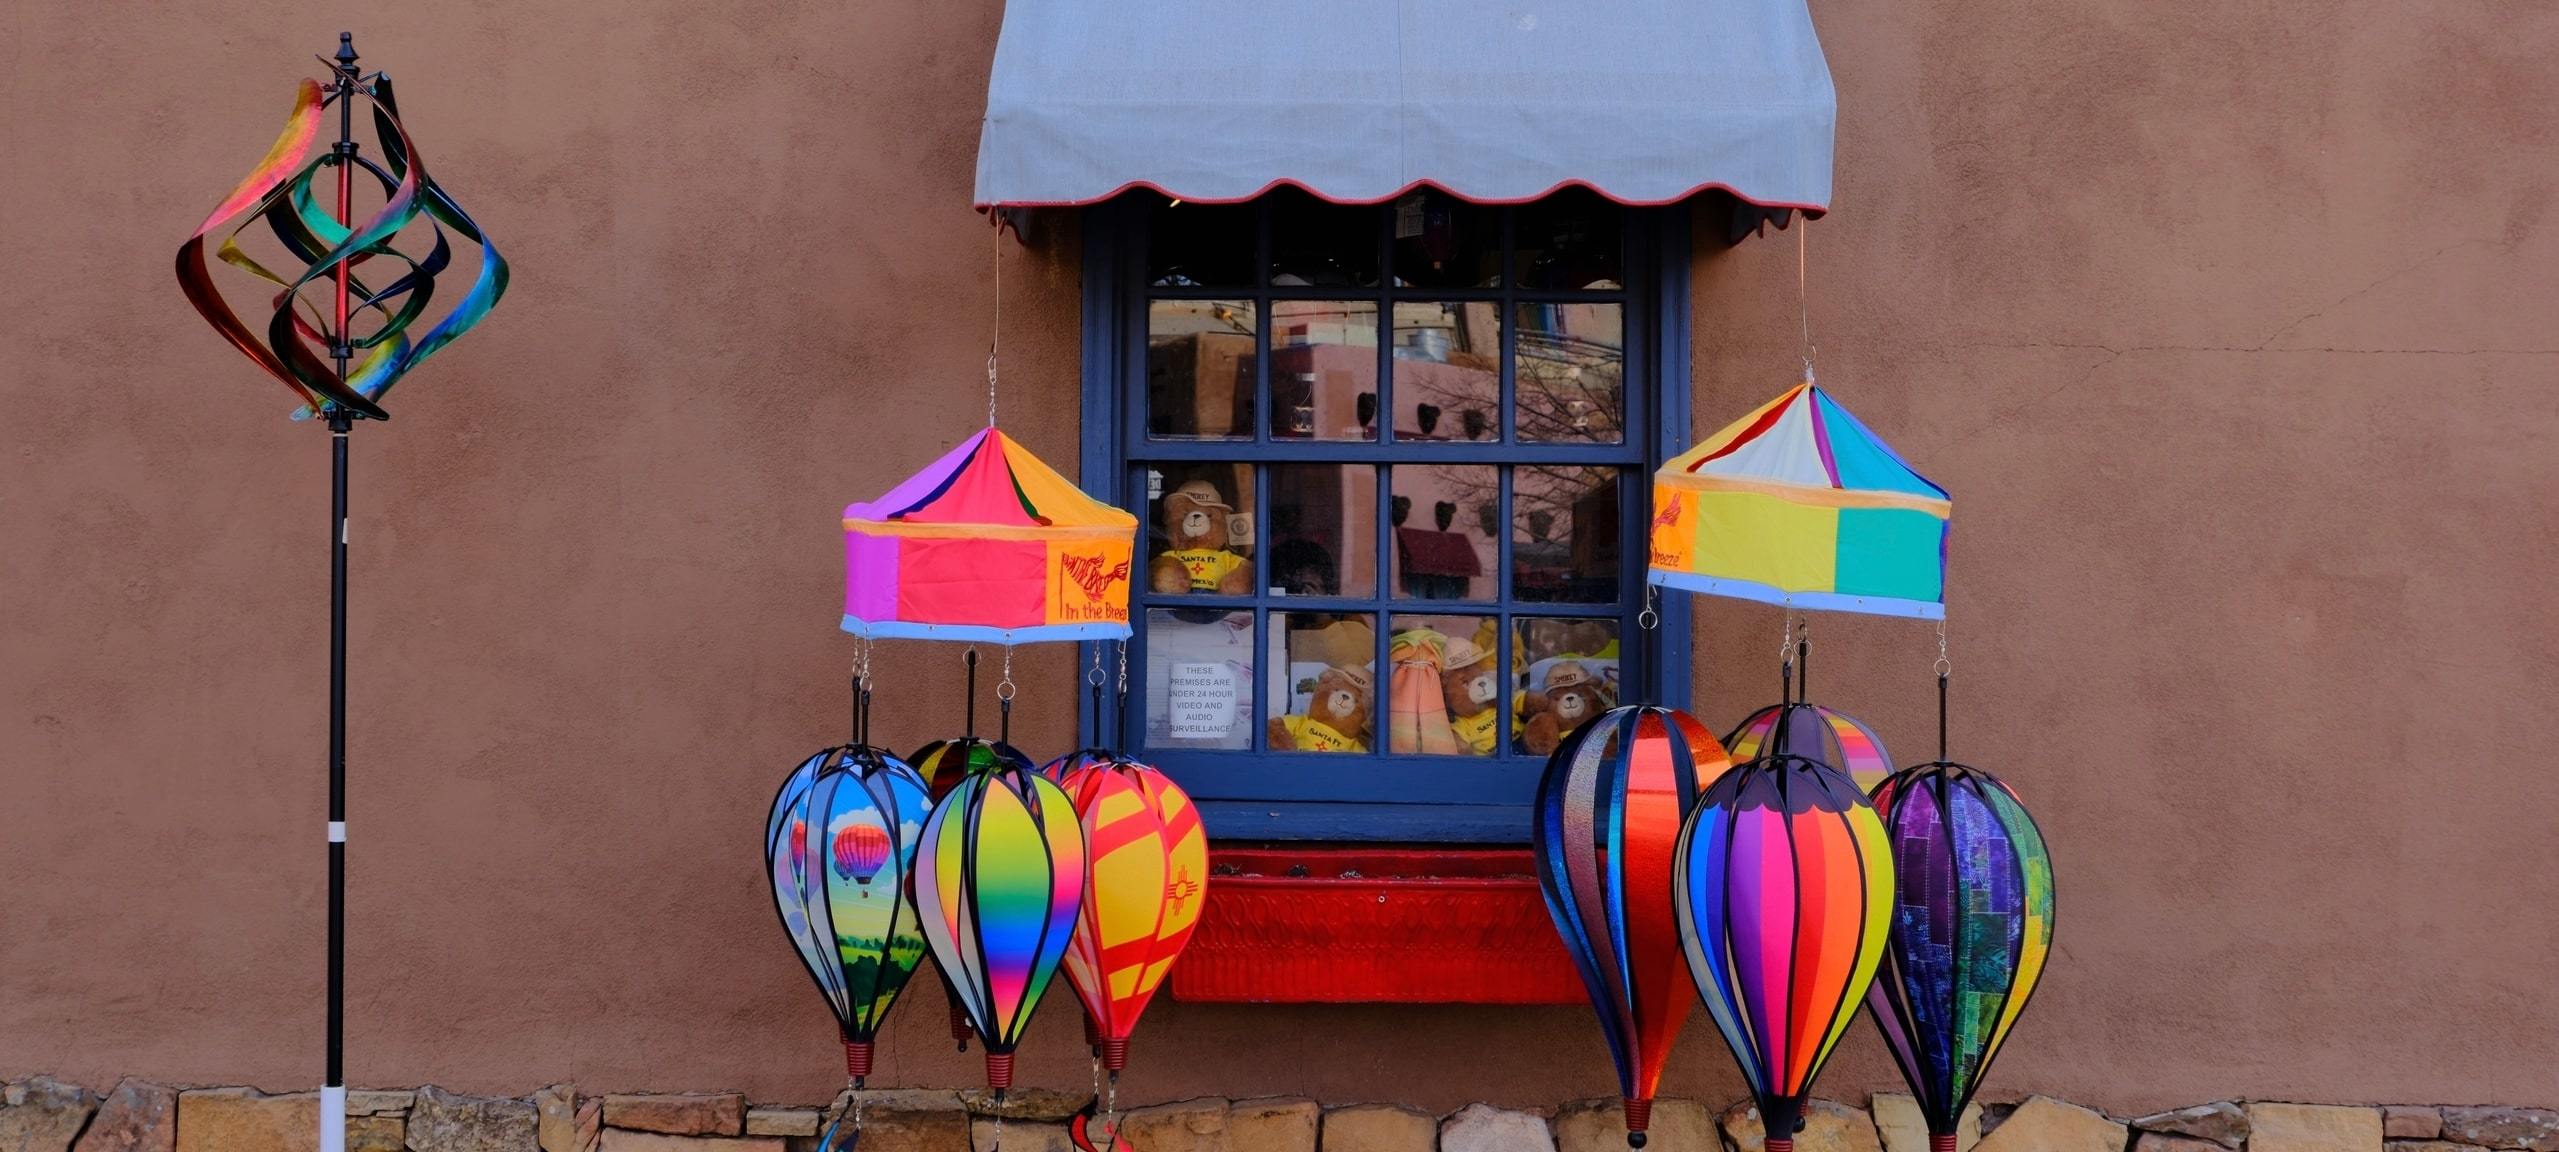 Colorful shop exterior in Canyon Road, Santa Fe